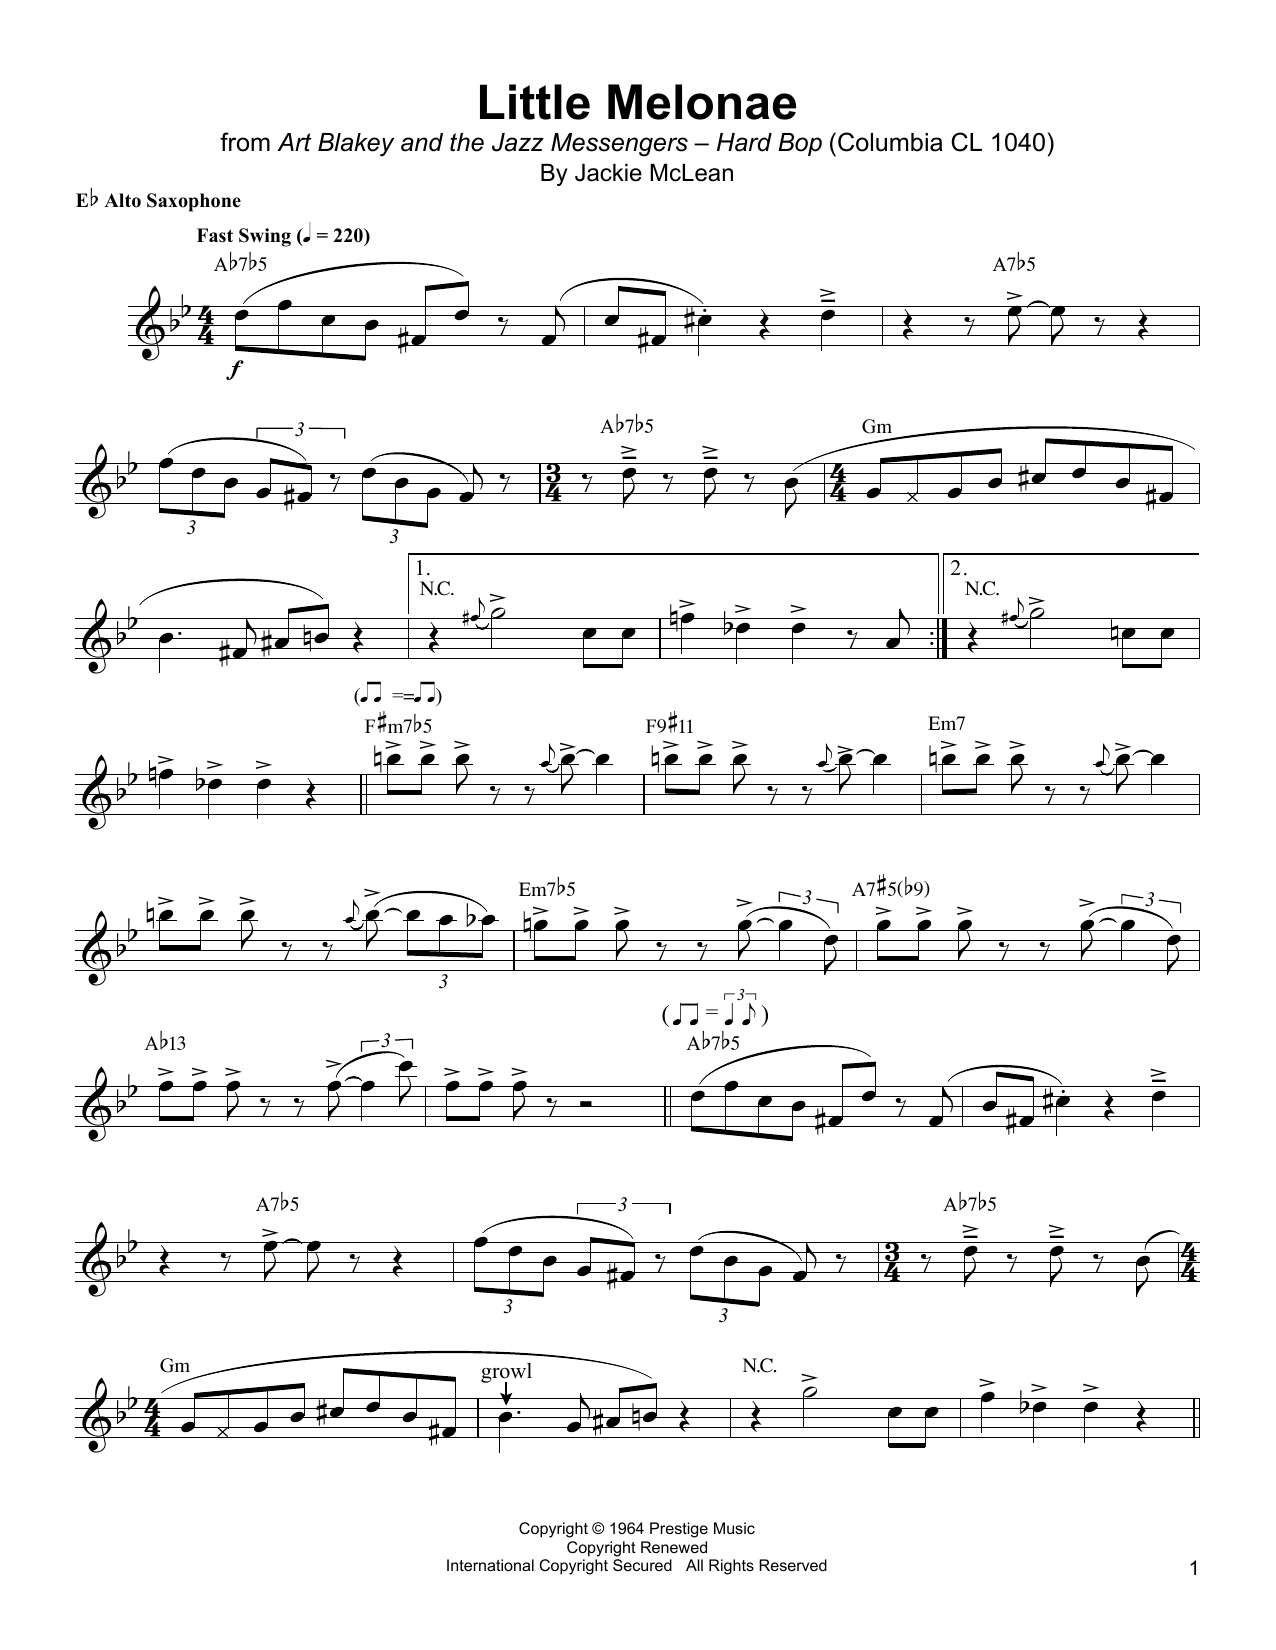 Jackie McLean Little Melonae Sheet Music Notes & Chords for Alto Sax Transcription - Download or Print PDF